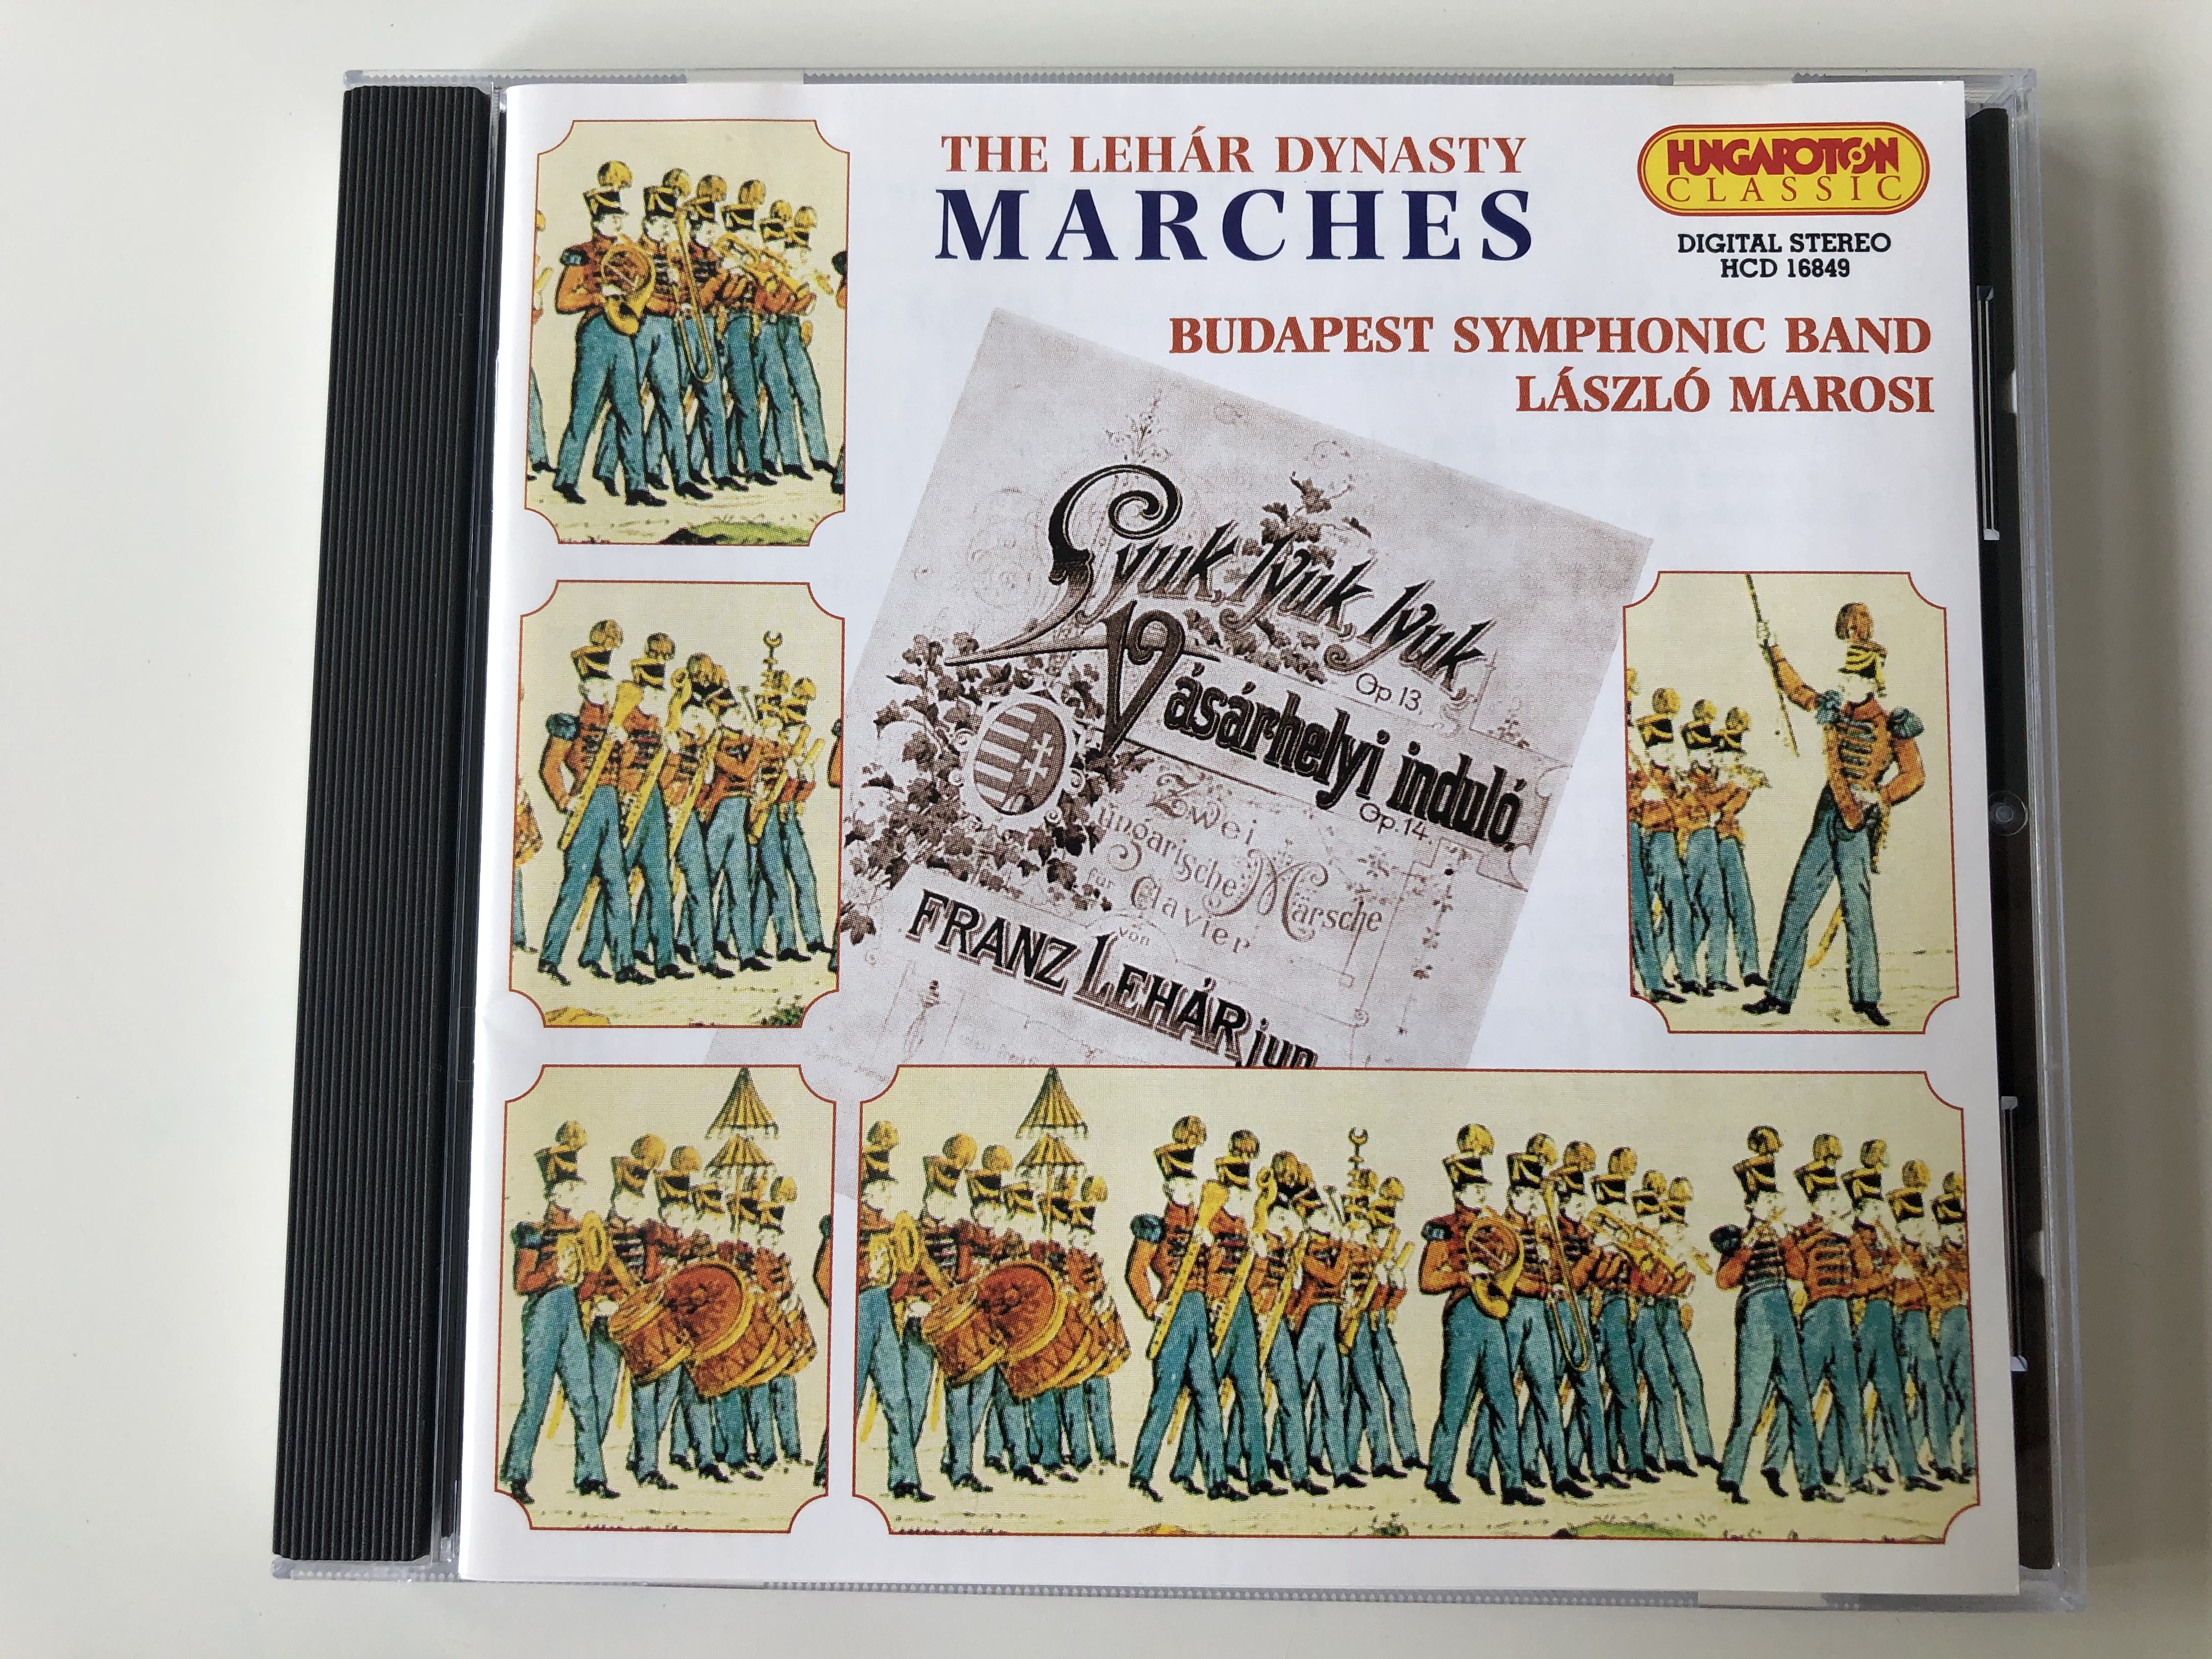 the-leh-r-dynasty-marches-budapest-symphonic-band-l-szl-marosi-hungaroton-classic-audio-cd-1997-stereo-hcd-16849-1-.jpg